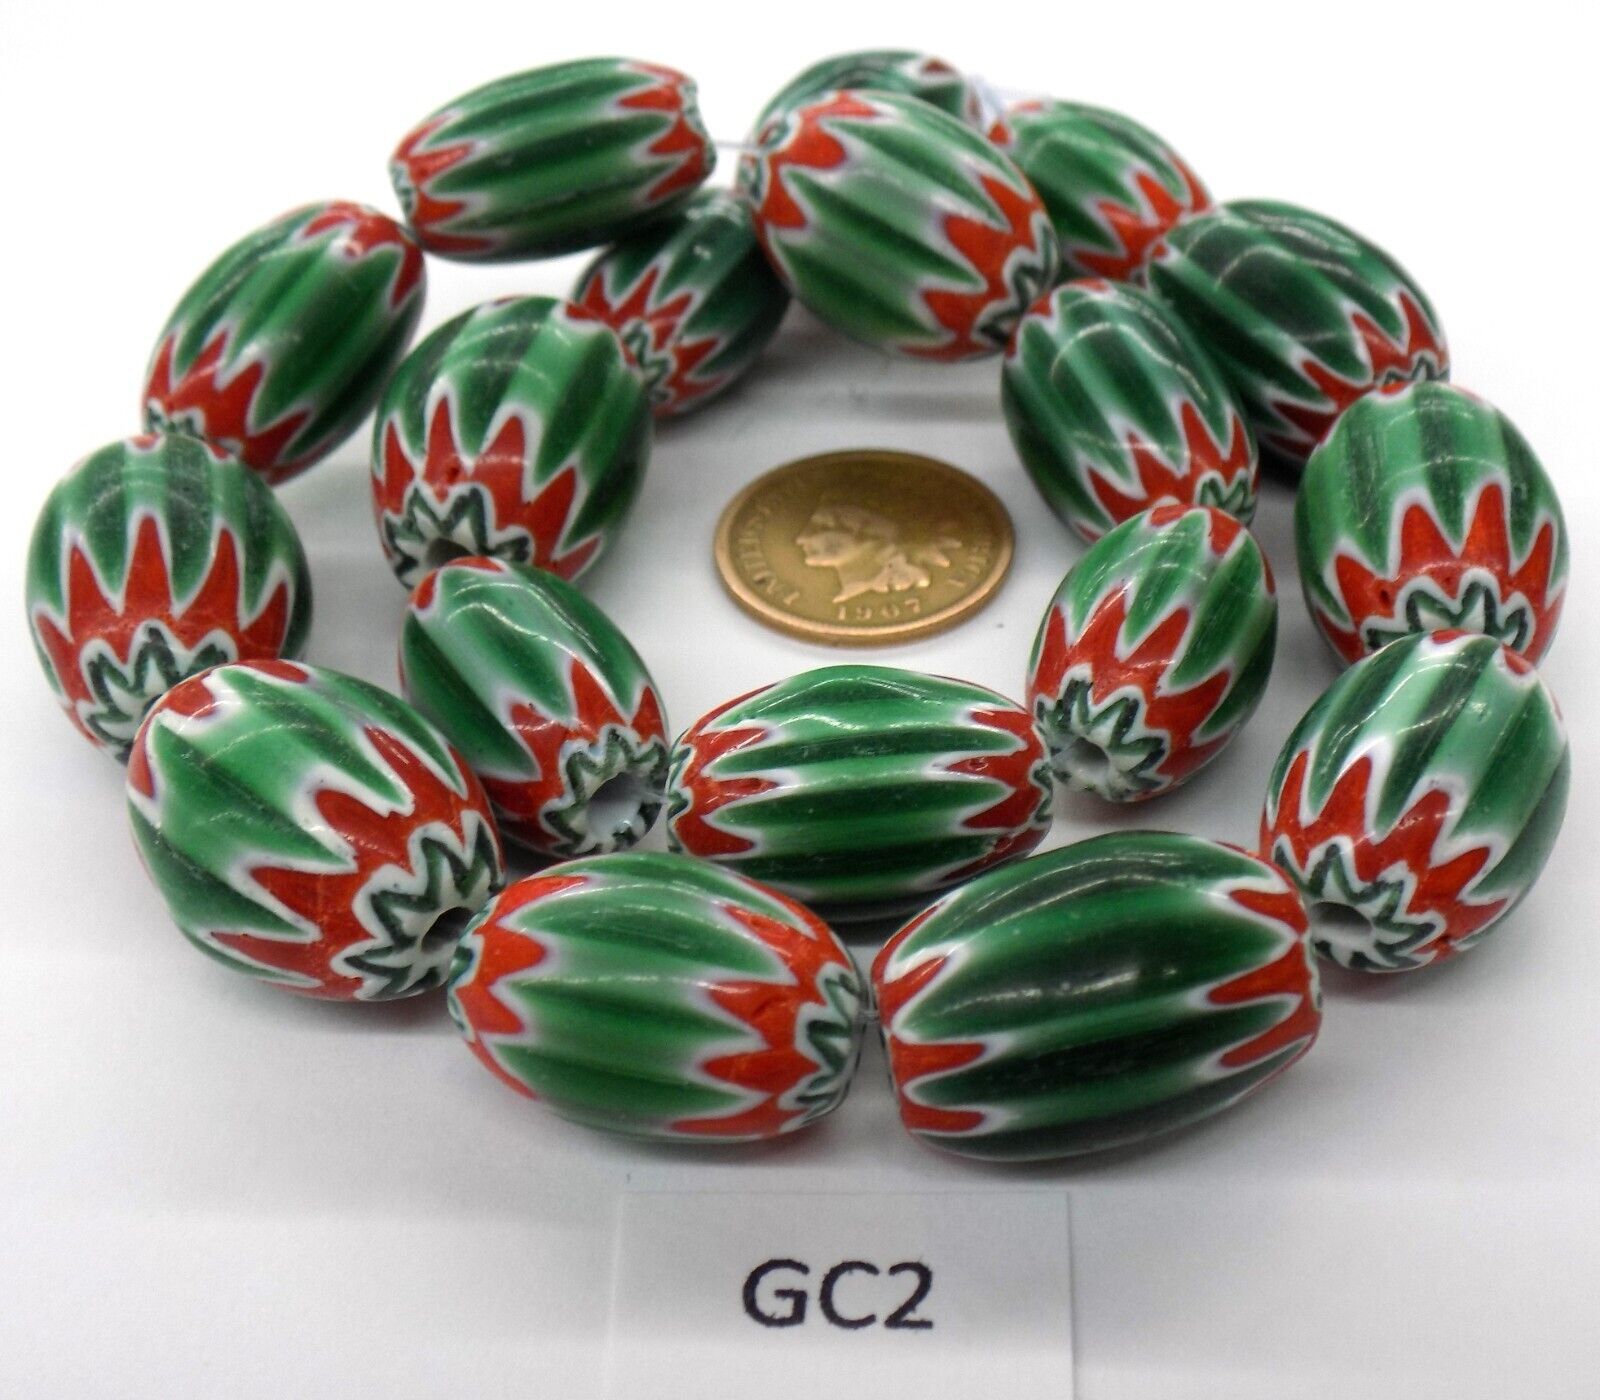 Strand of Large Green Watermelon Chevron African Trade Beads Bin W10 GC2